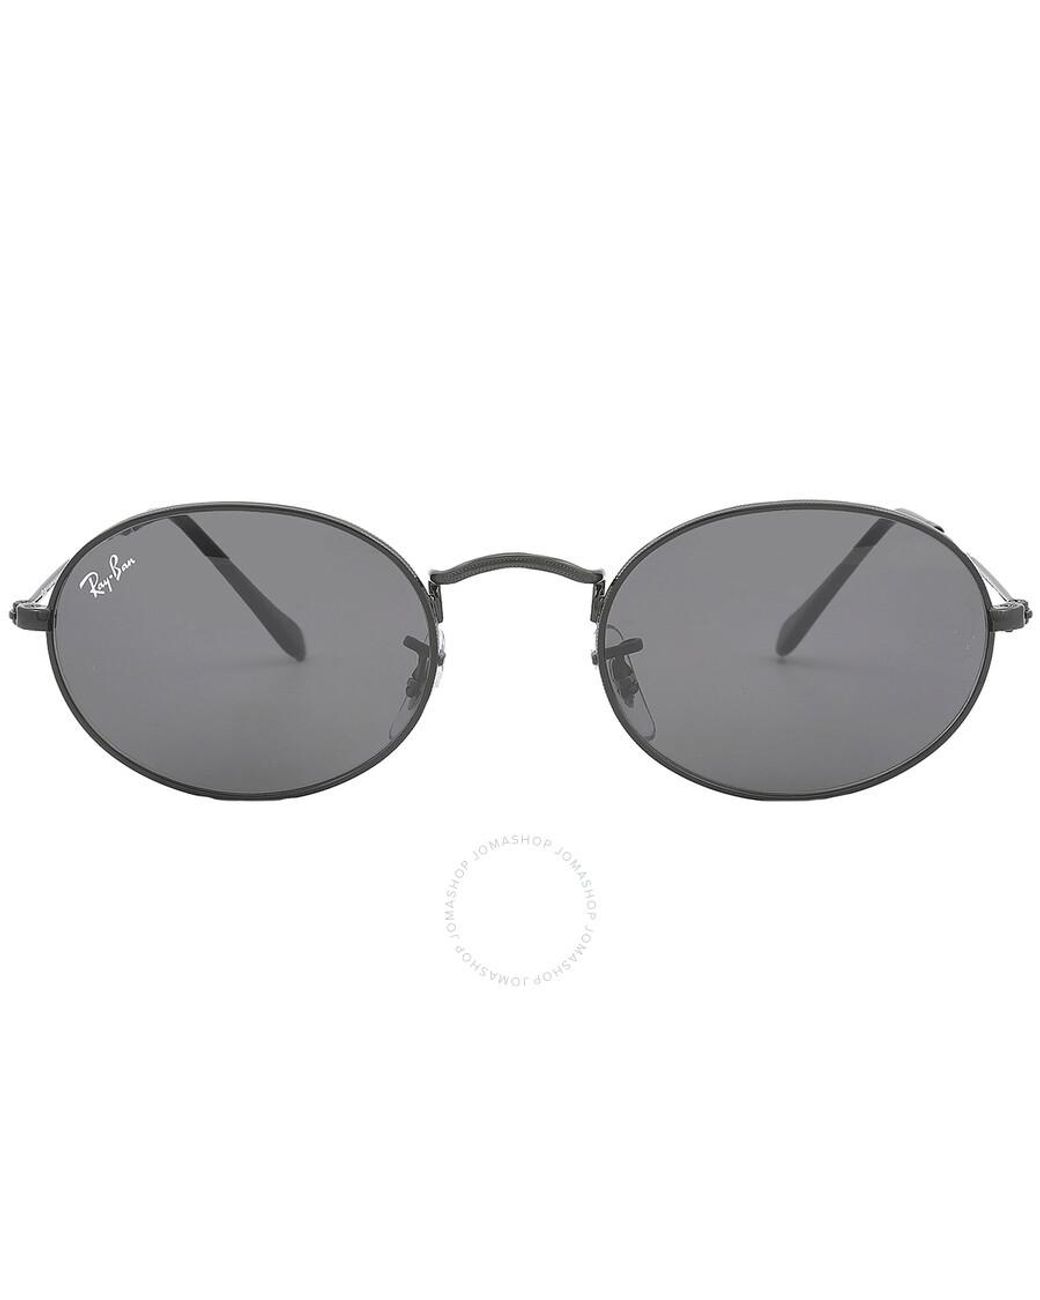 Ray-Ban Oval Dark Gray Sunglasses Rb3547 002/b1 51 | Lyst UK